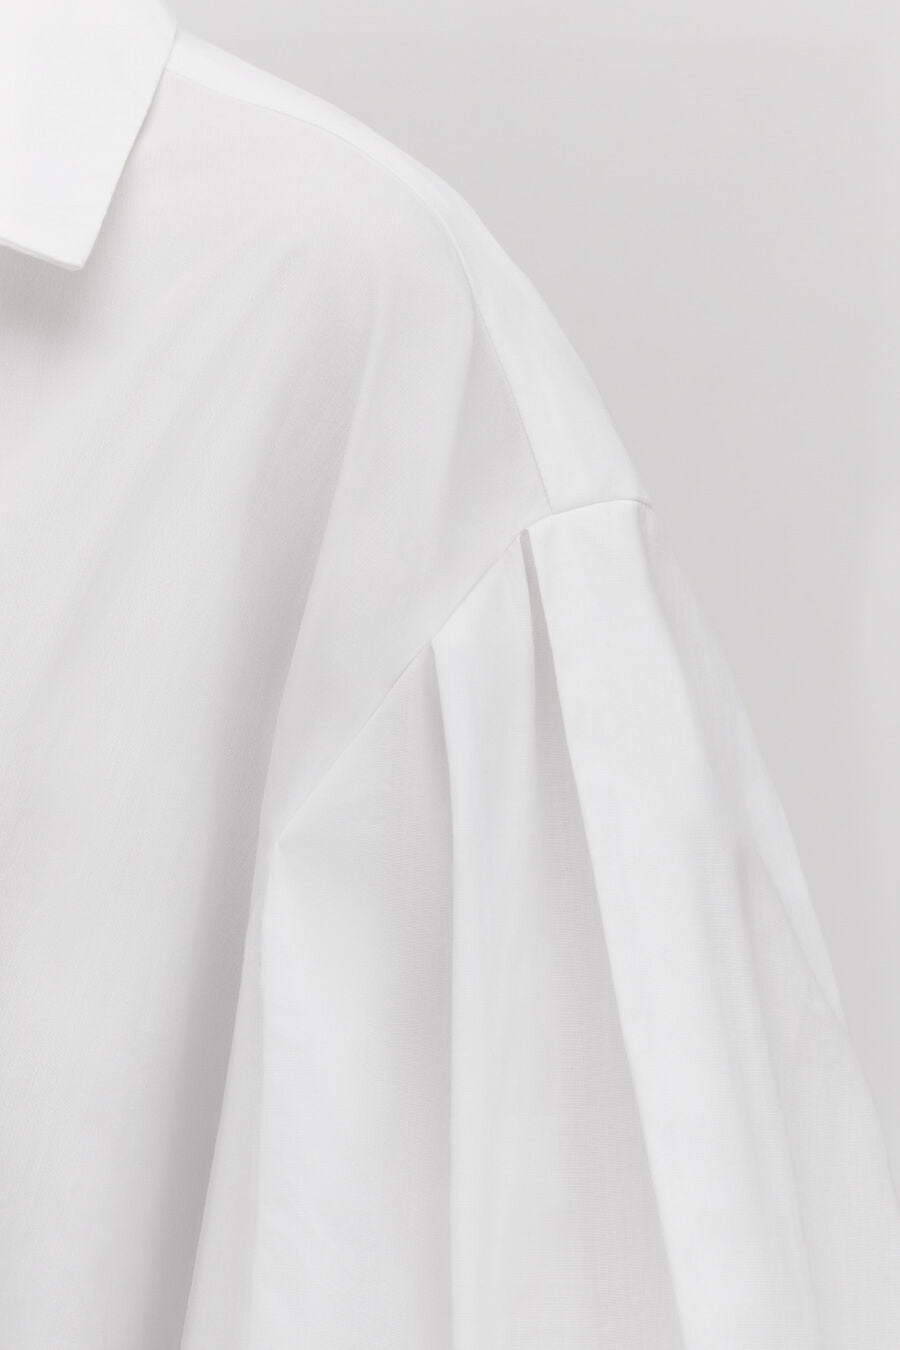 100% Organic Cotton Poplin Long Sleeve Shirt